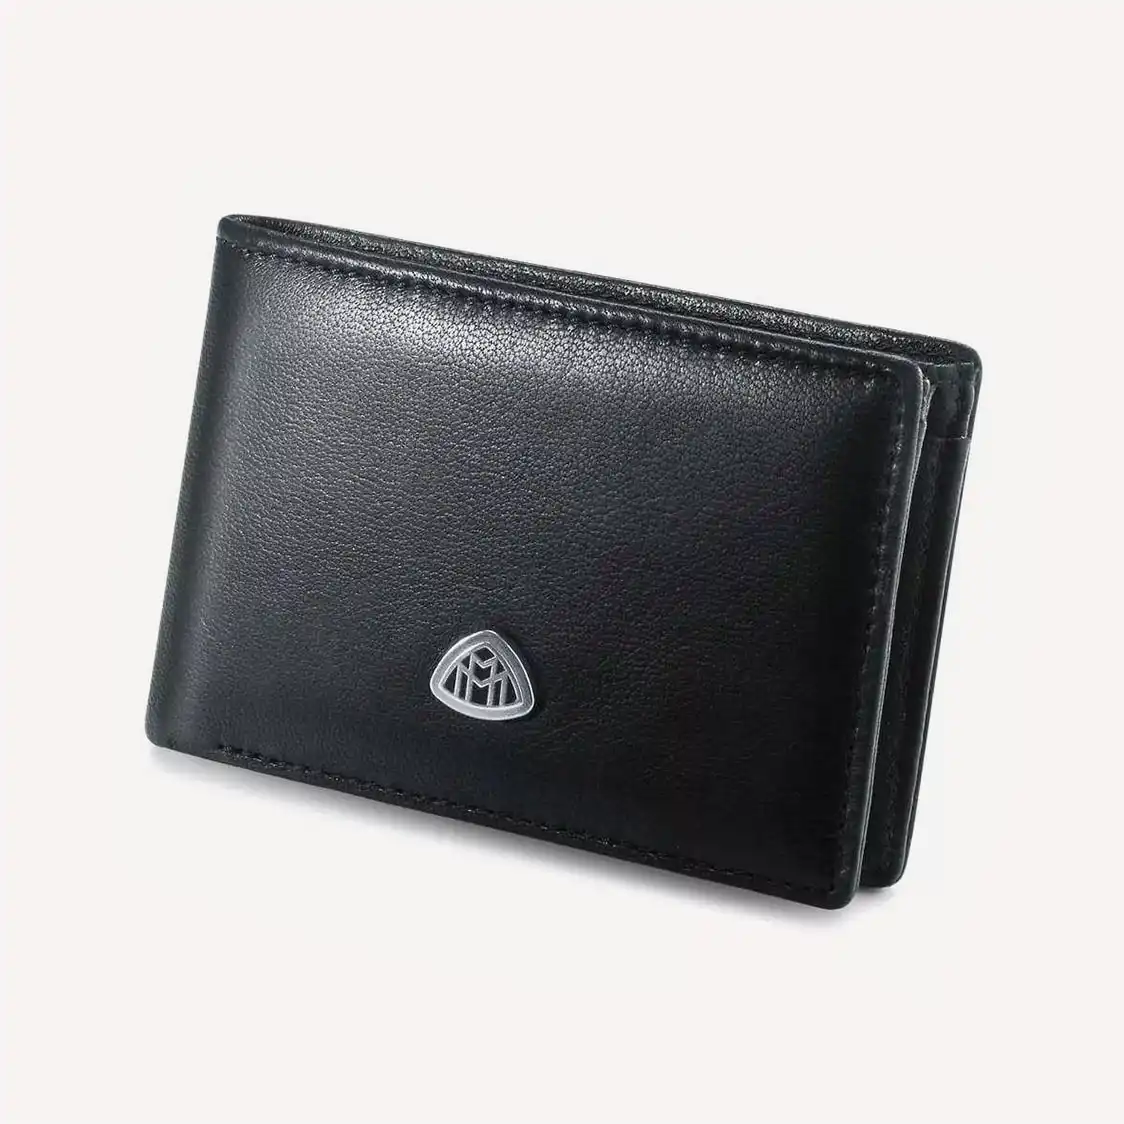 Maybach Luxury - Courtesy II Wallet